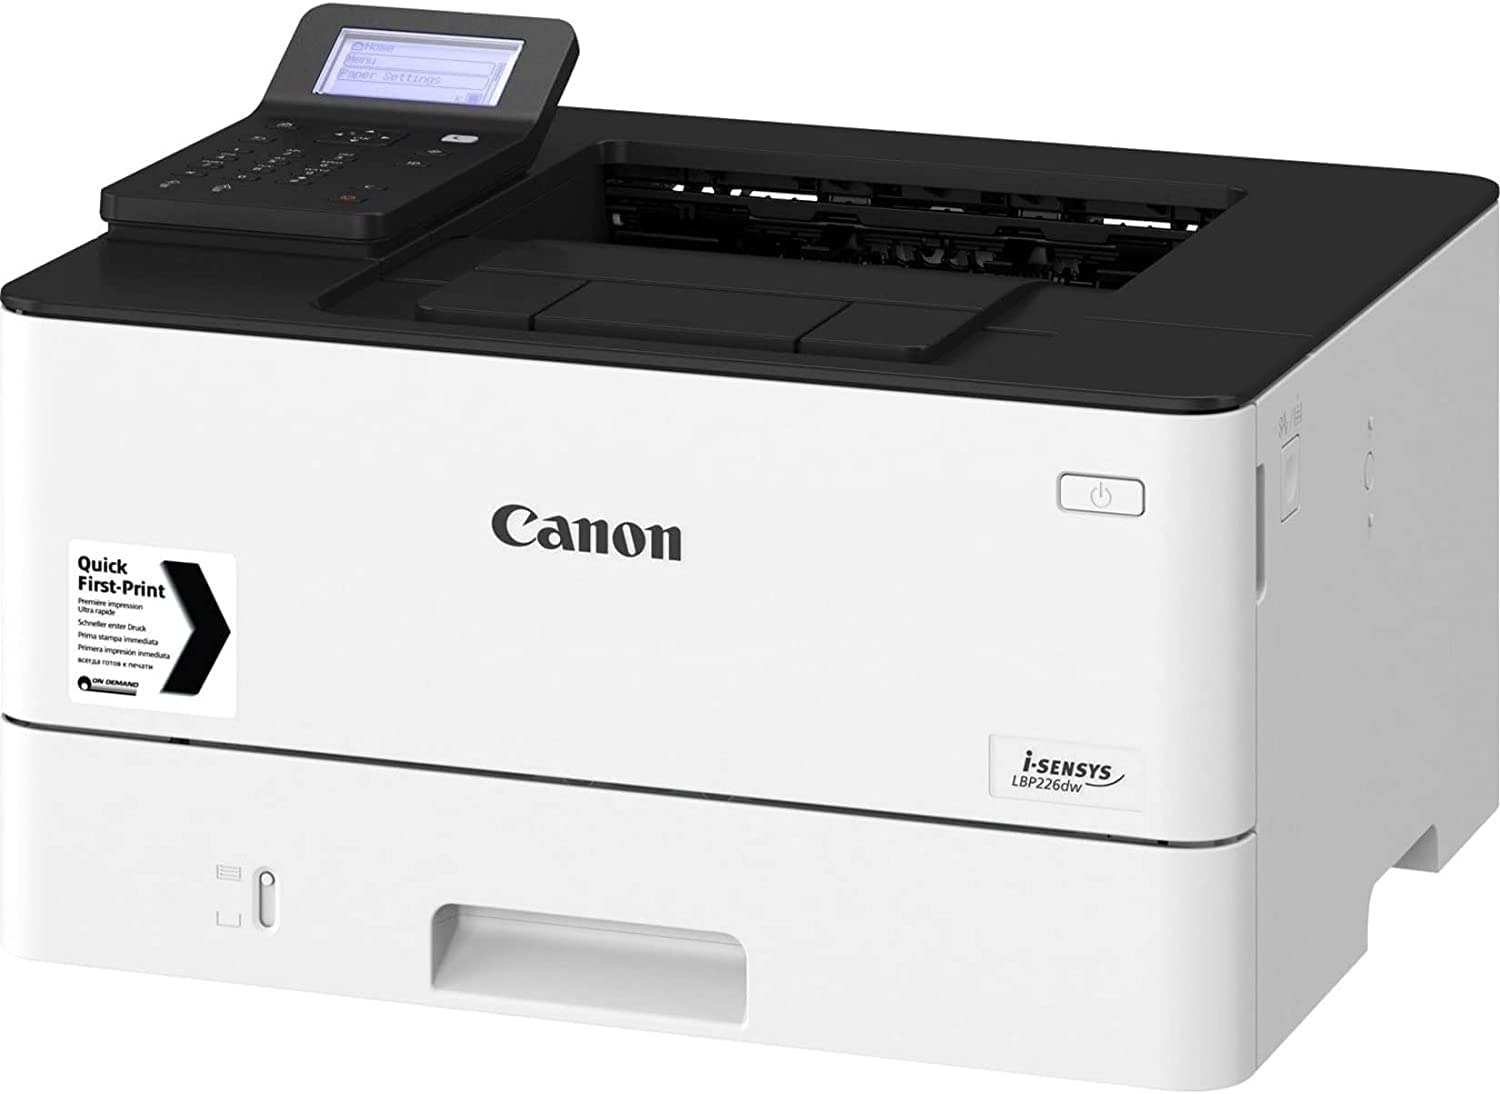 Canon-i-SENSYS-LBP236dw-Compact-Monochrome-Laser-Printer.JPG2_